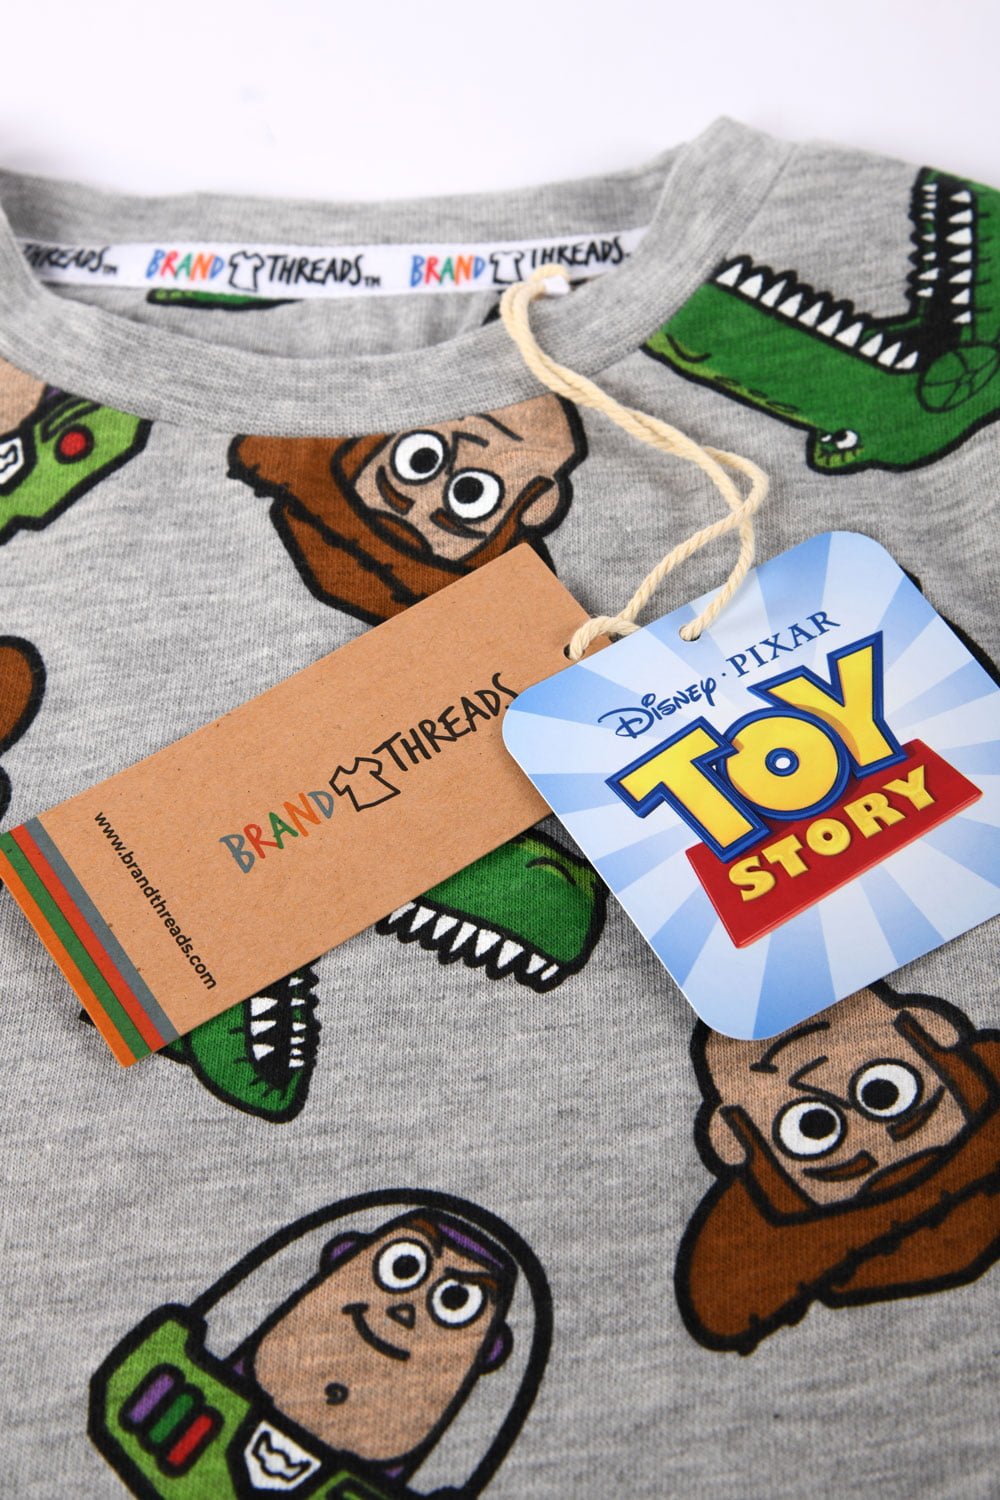 Disney Toy Story Boys BCI Cotton Pyjamas - Brand Threads